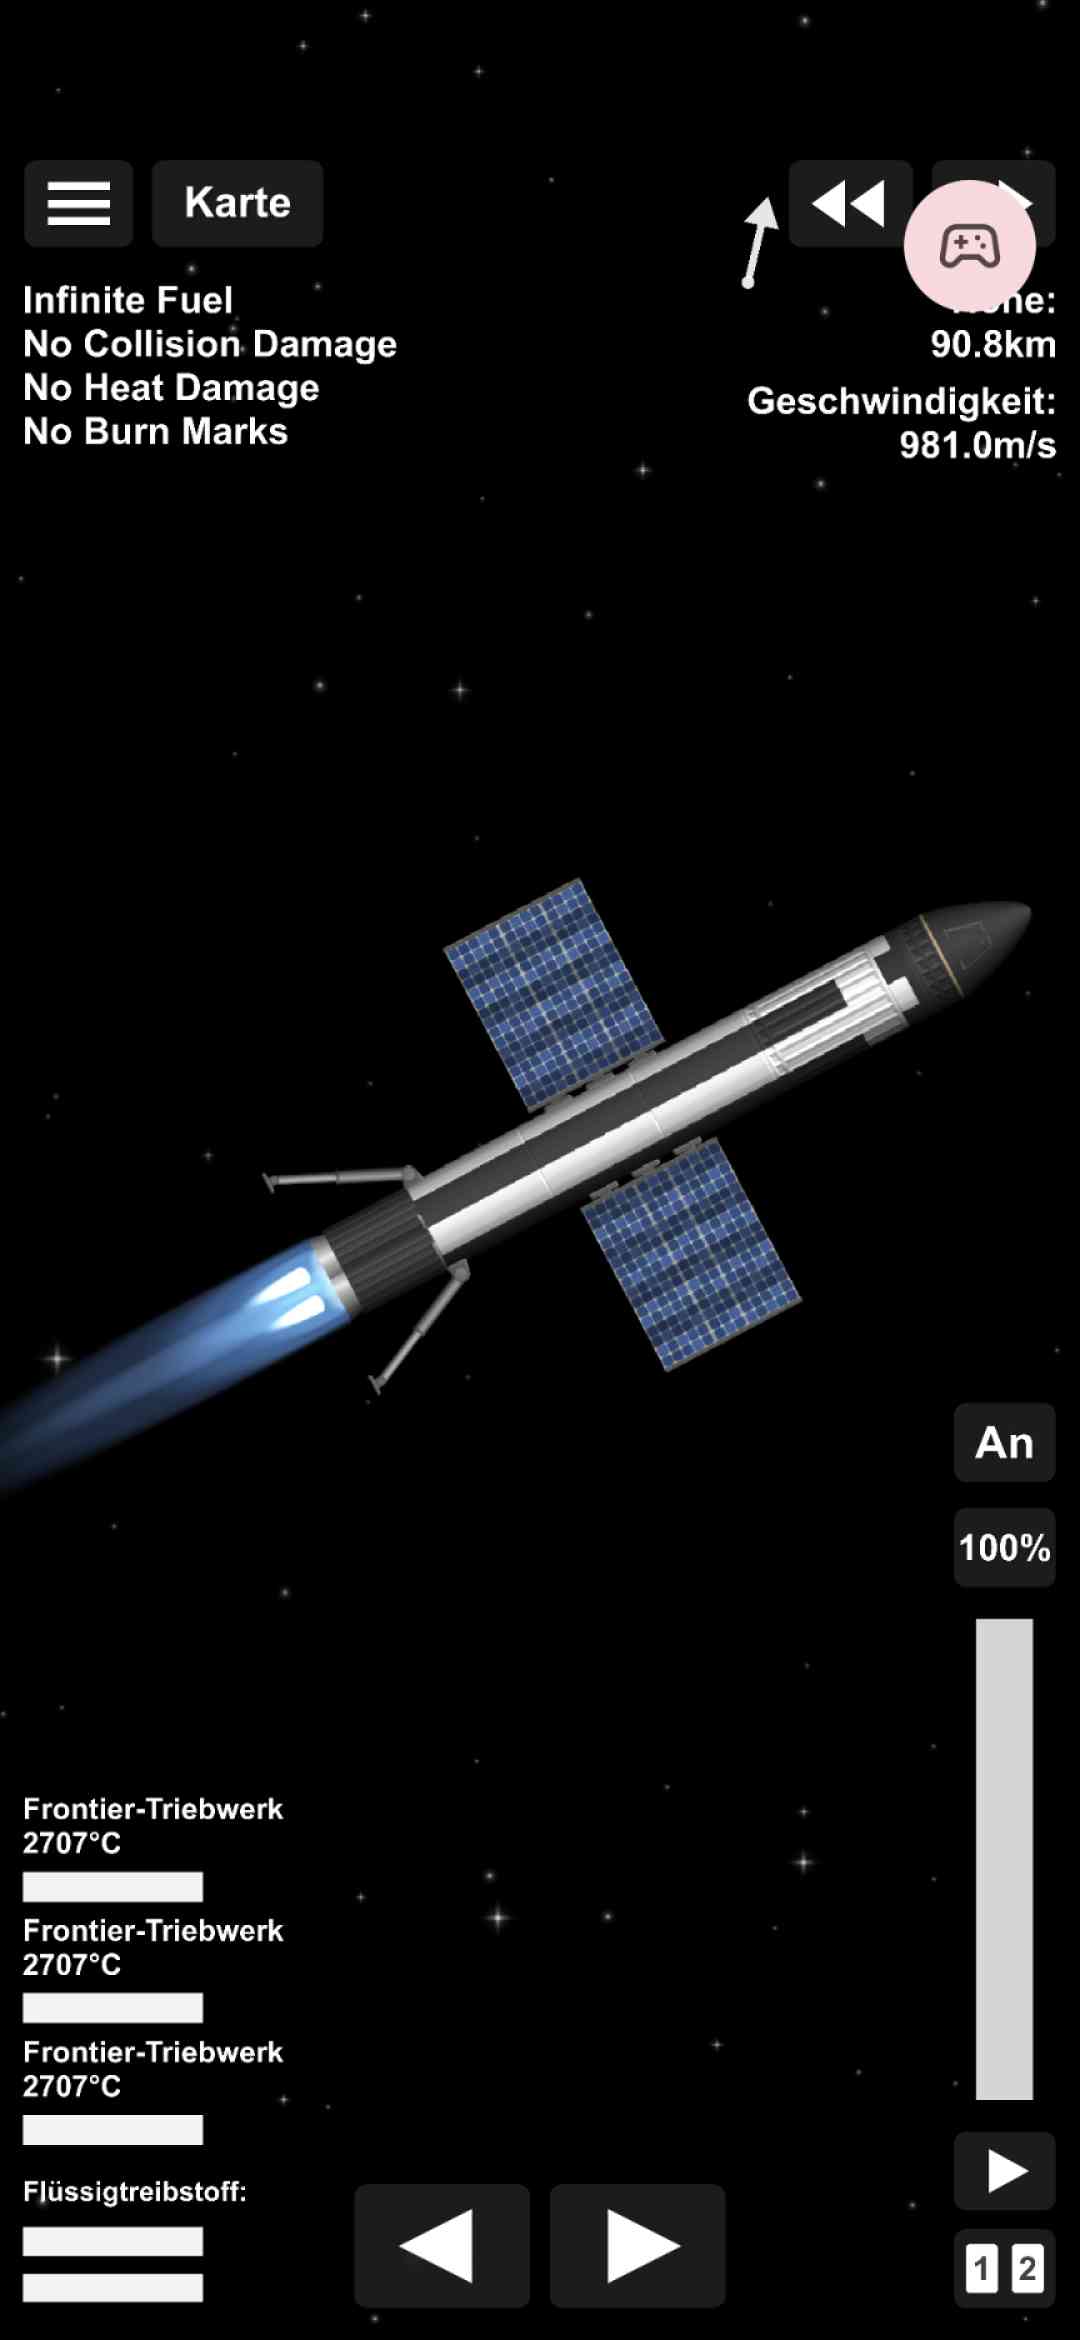 - Item - Blueprint for Spaceflight Simulator